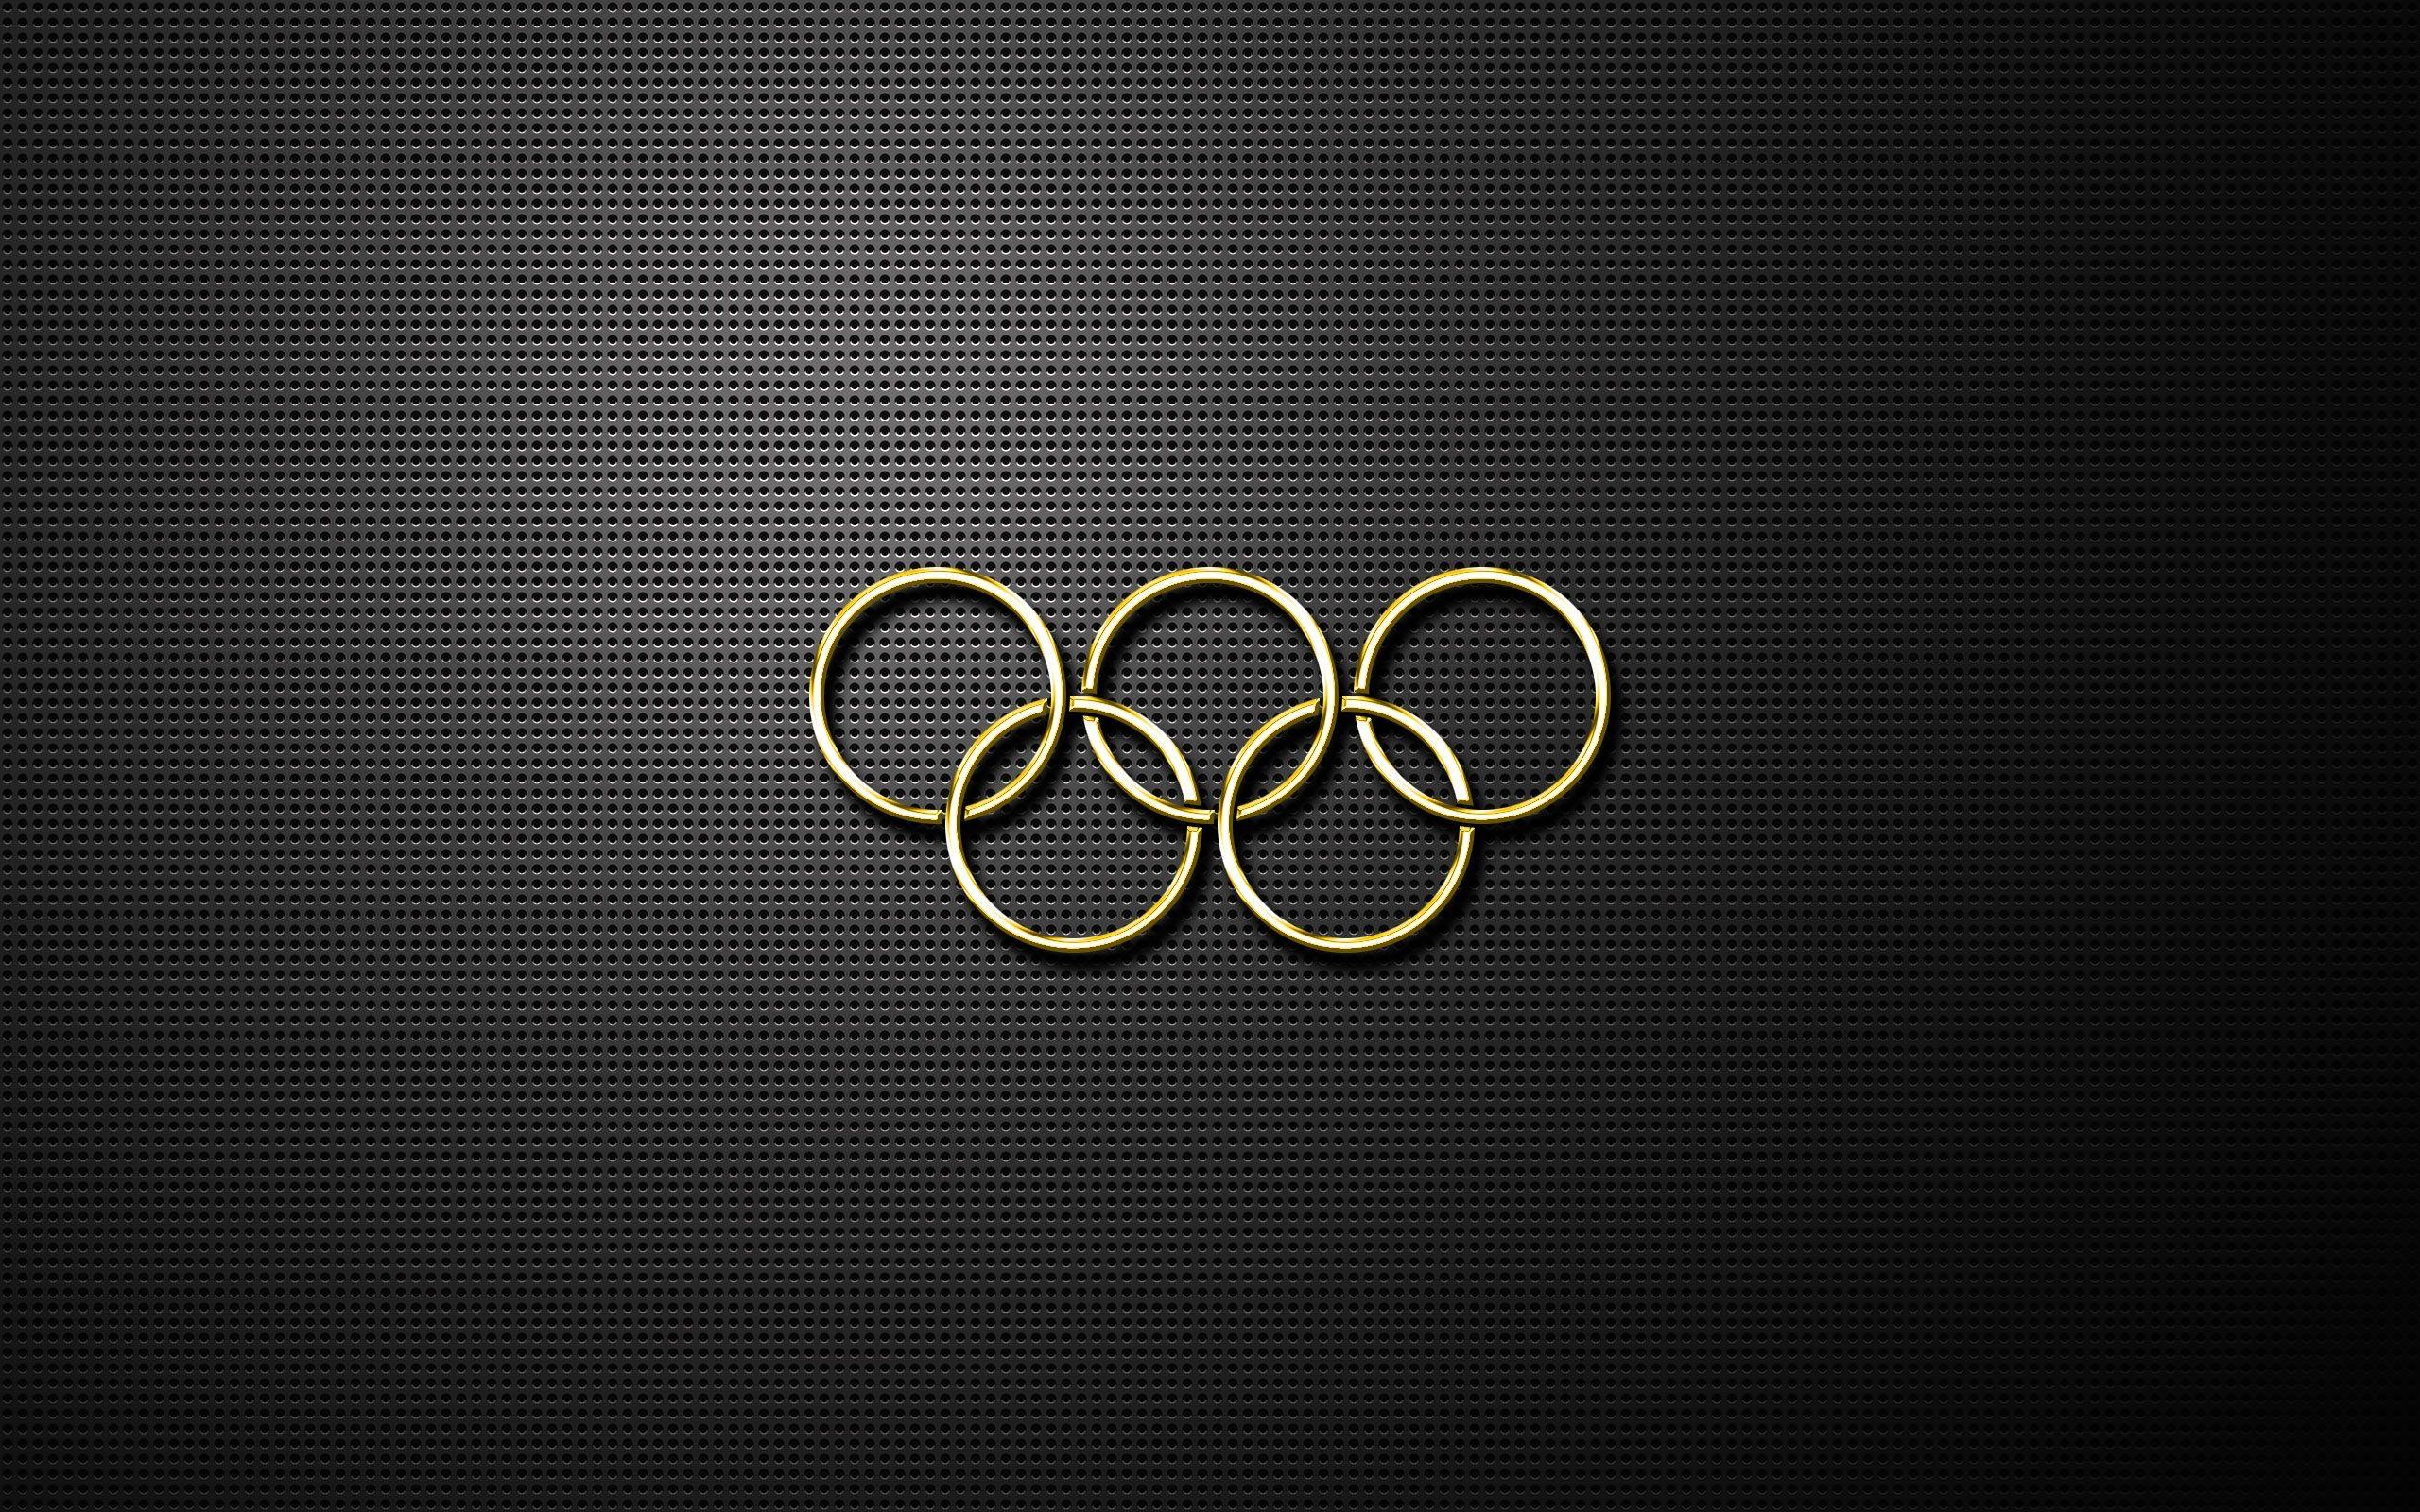 Olympics Rings Desktop Wallpaper. Olympic rings, Olympics, Wallpaper free download